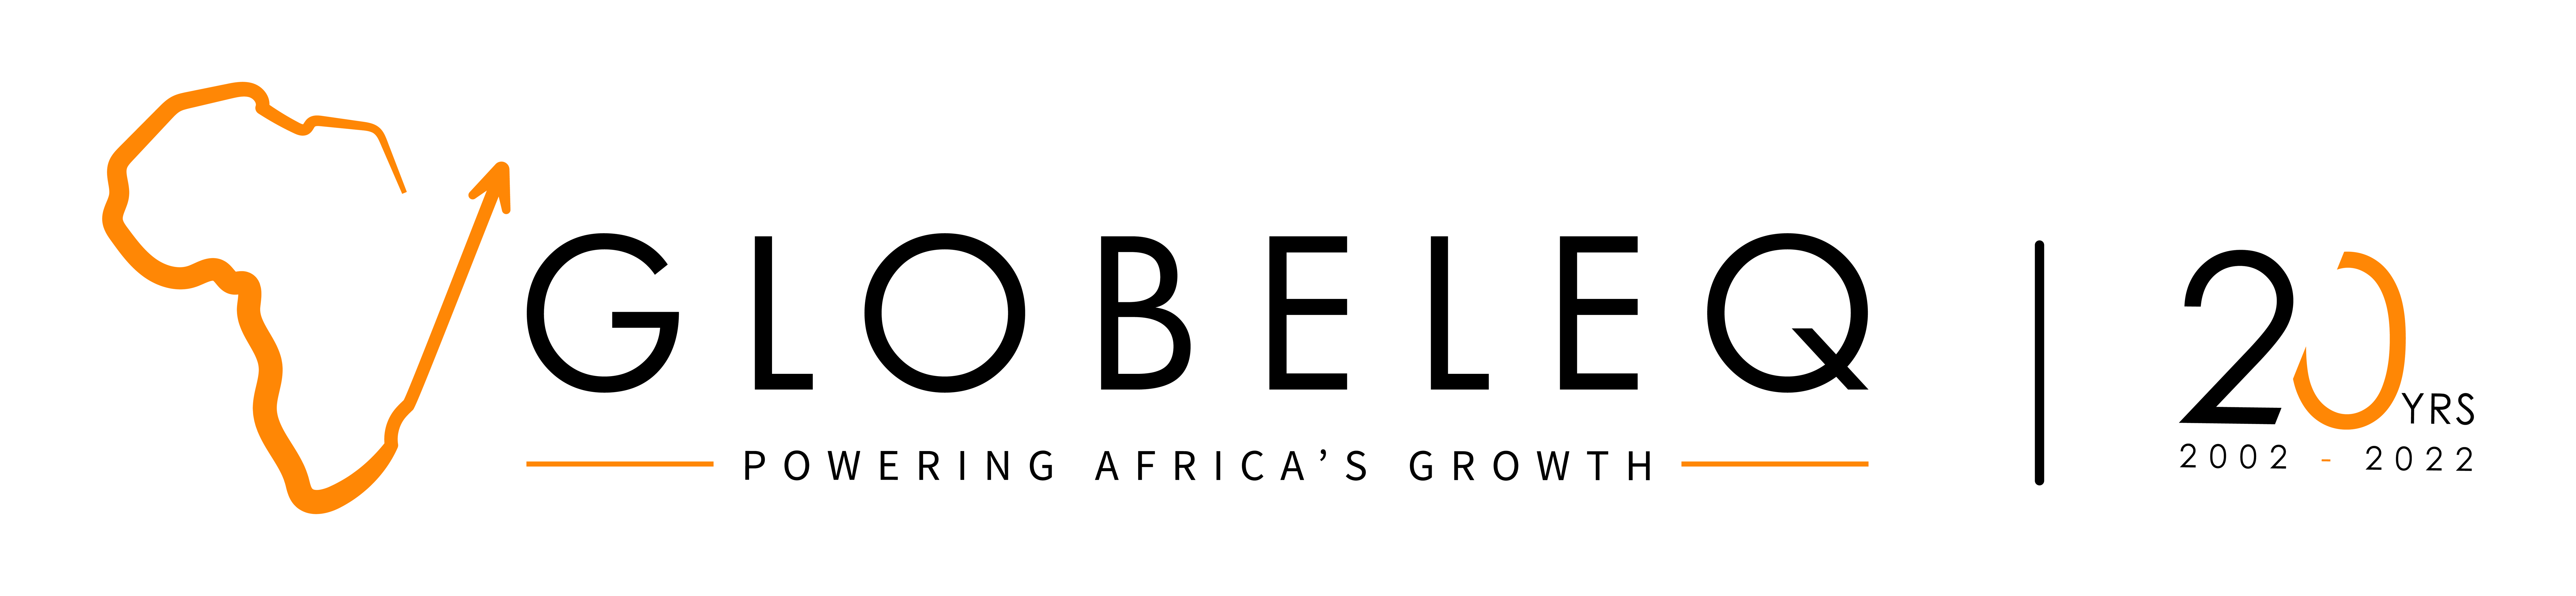 Globeleq 20Th Anniversary Logo Globeleq Horizontal